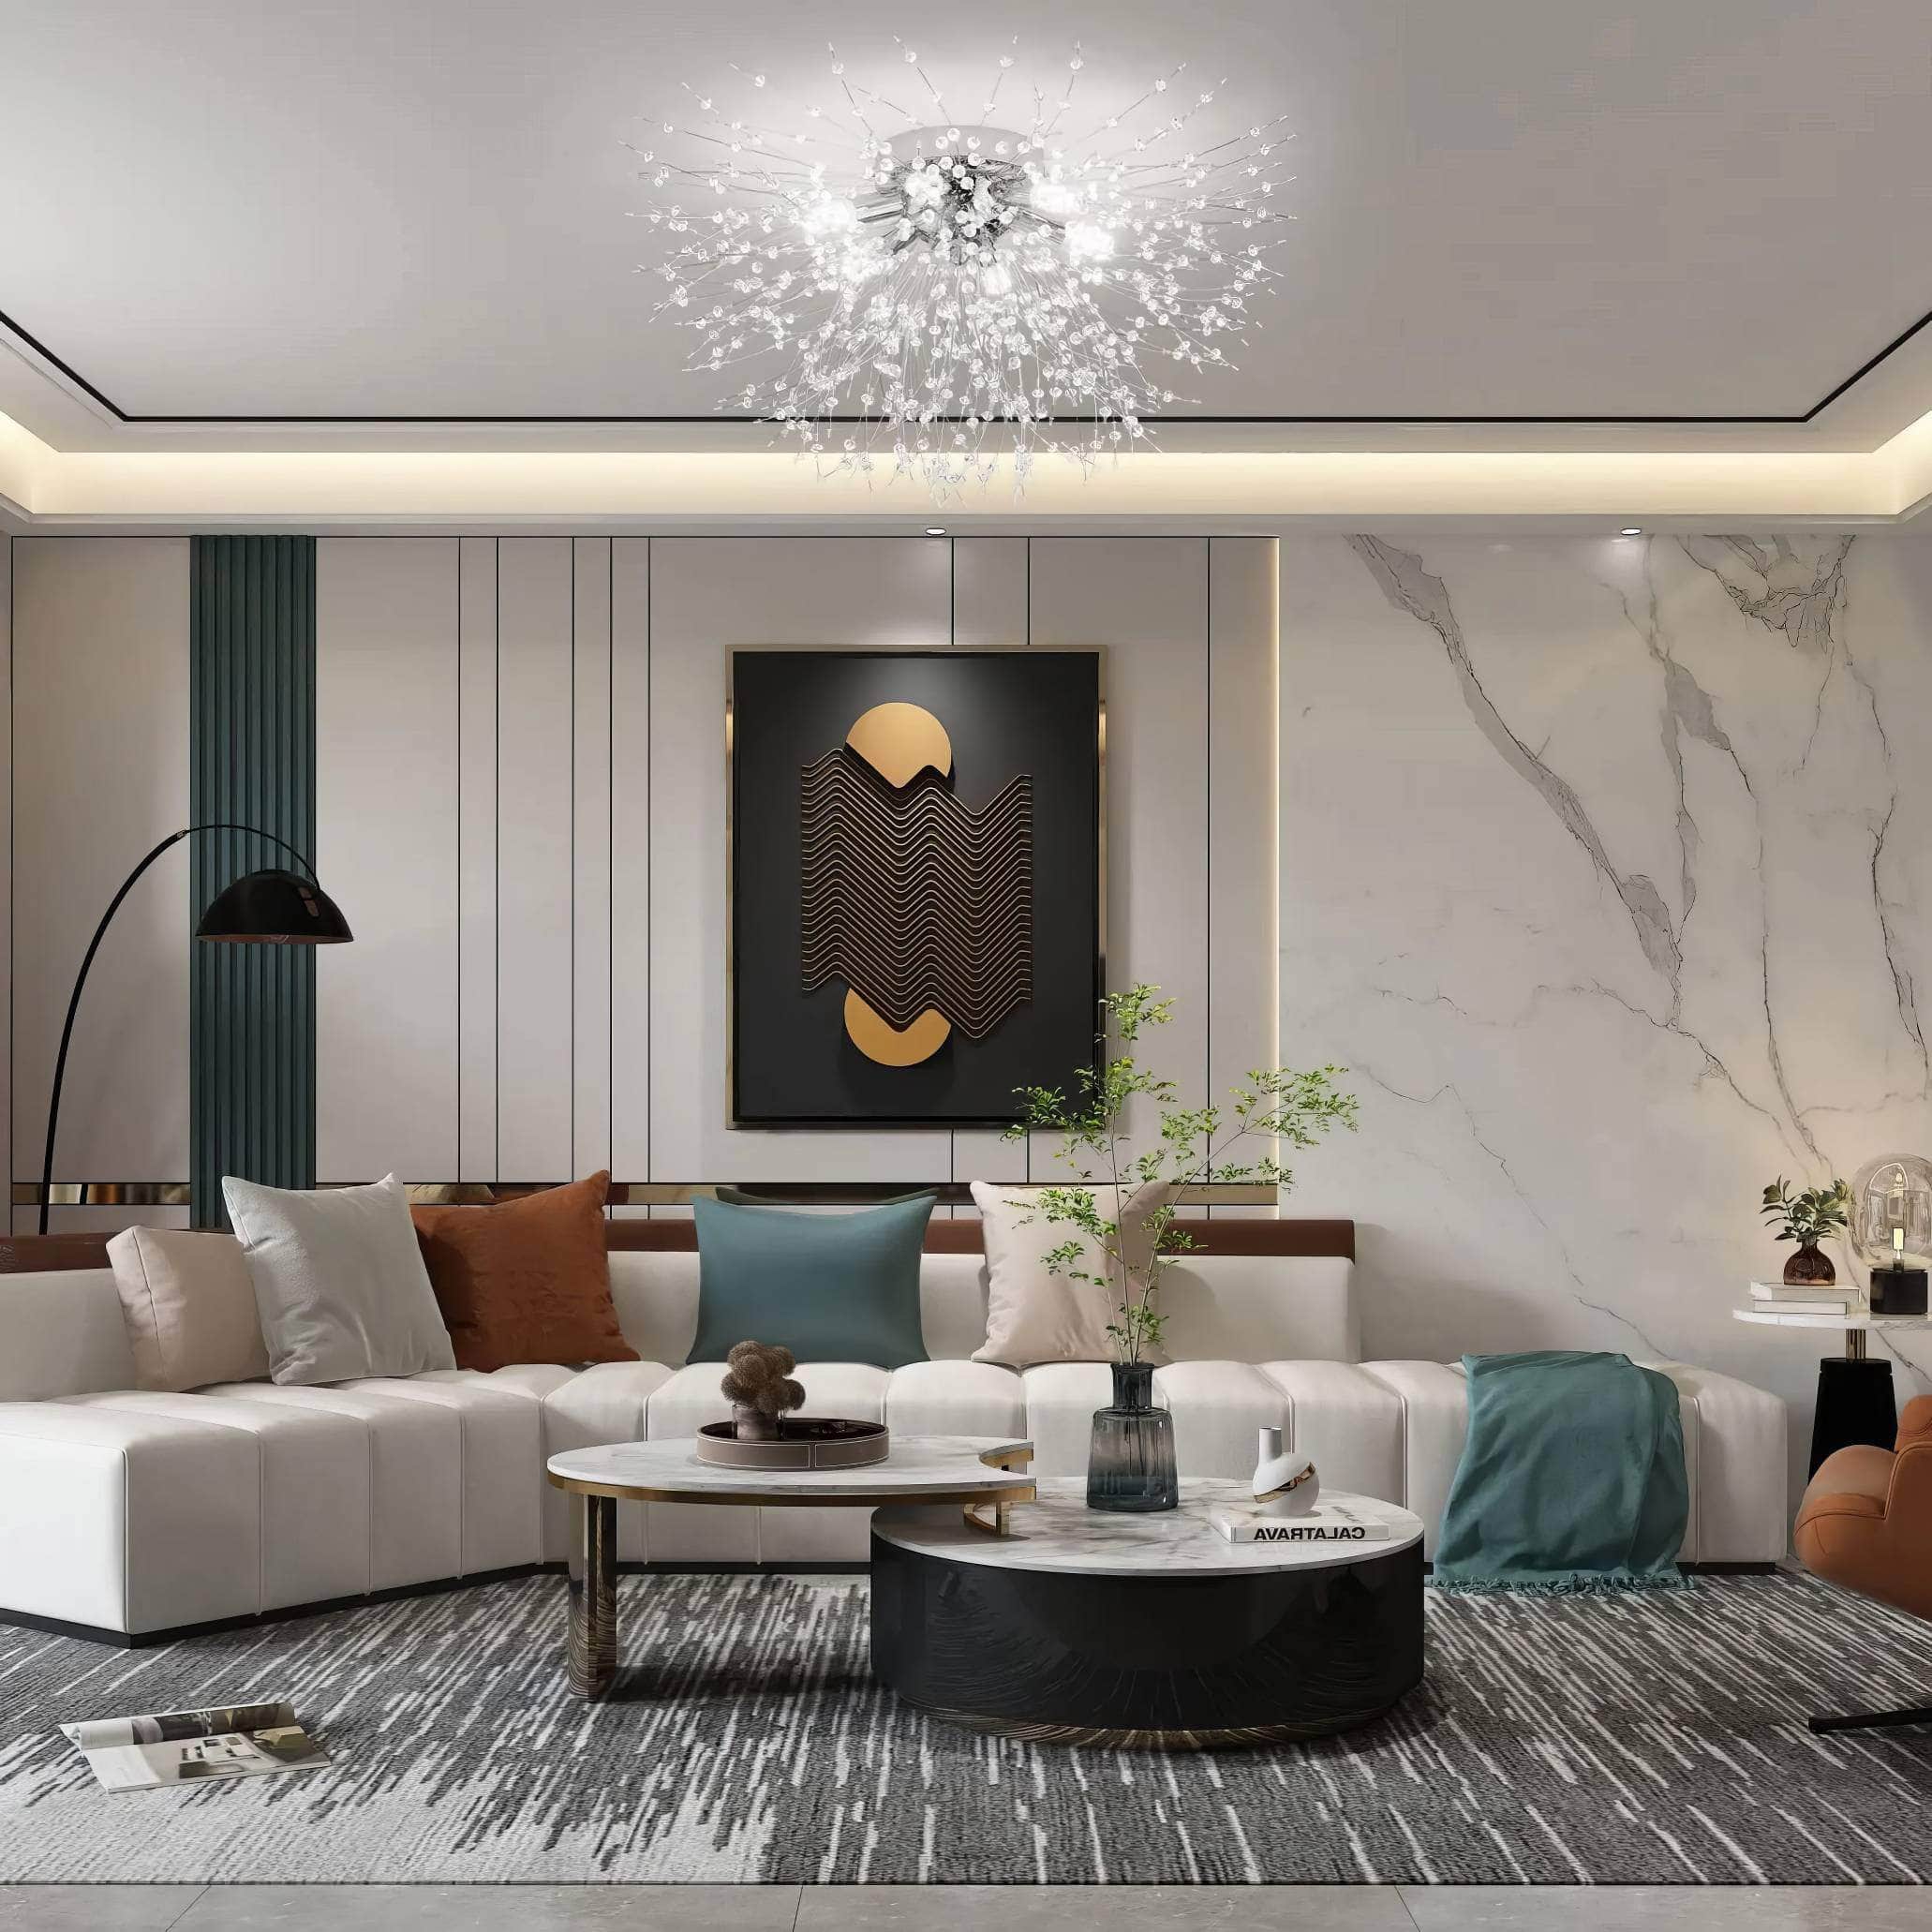 IRALAN Lustre LED Ceiling Lighting: Dandelion Chandelier for Dining and Living Room, Art Crystal Lamps - Home Decor Lights